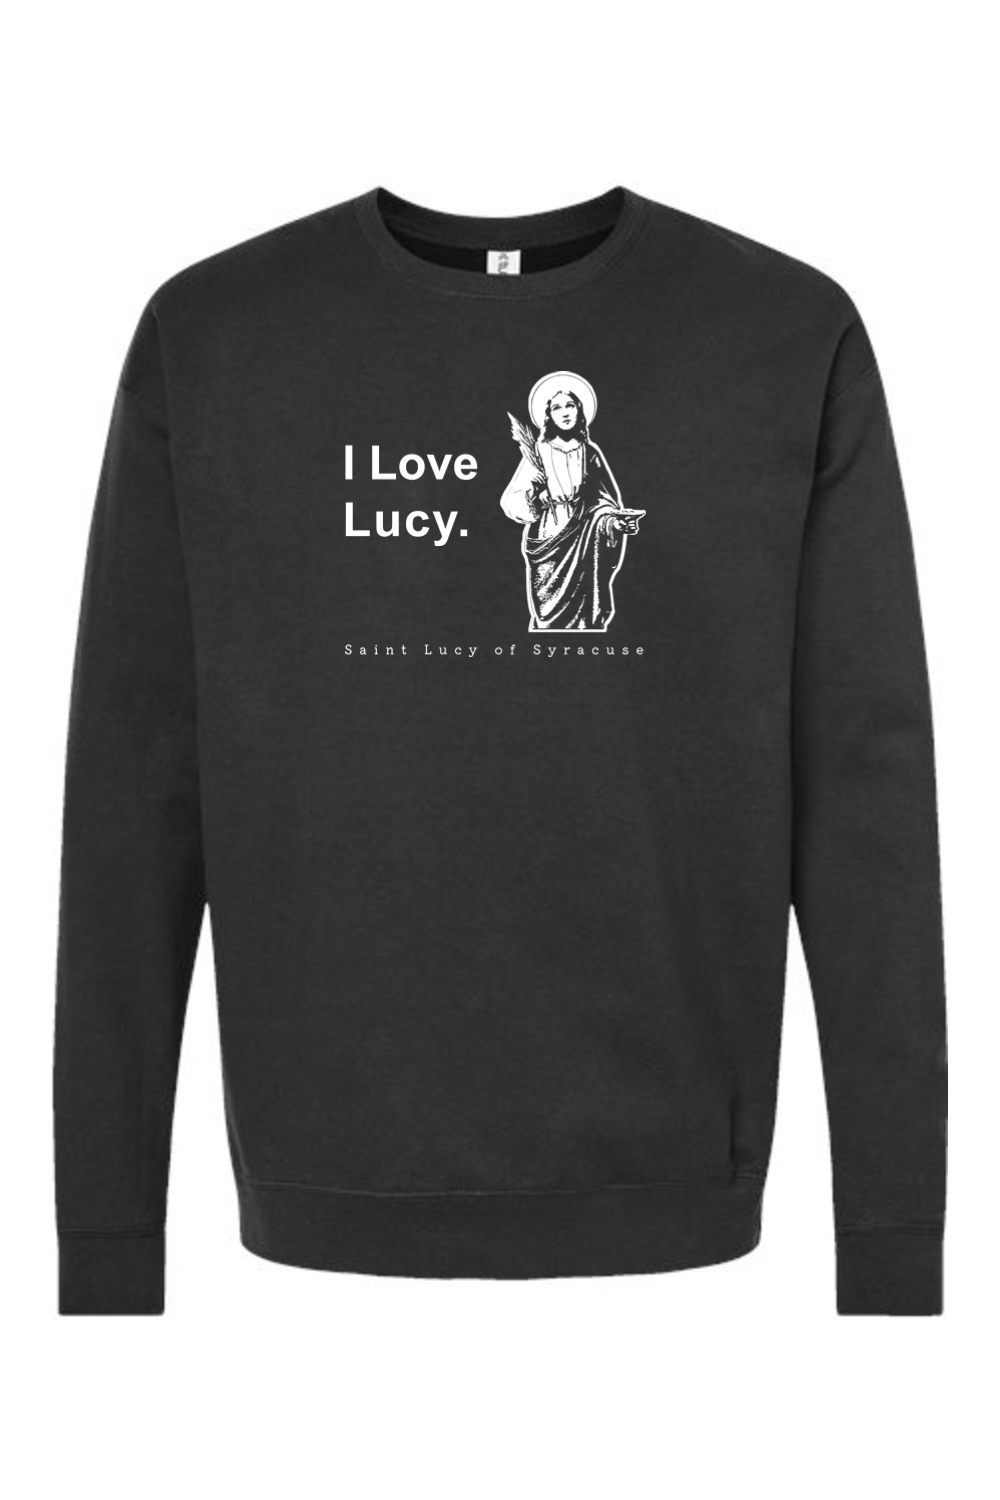 I Love Lucy - St. Lucy Crewneck Sweatshirt